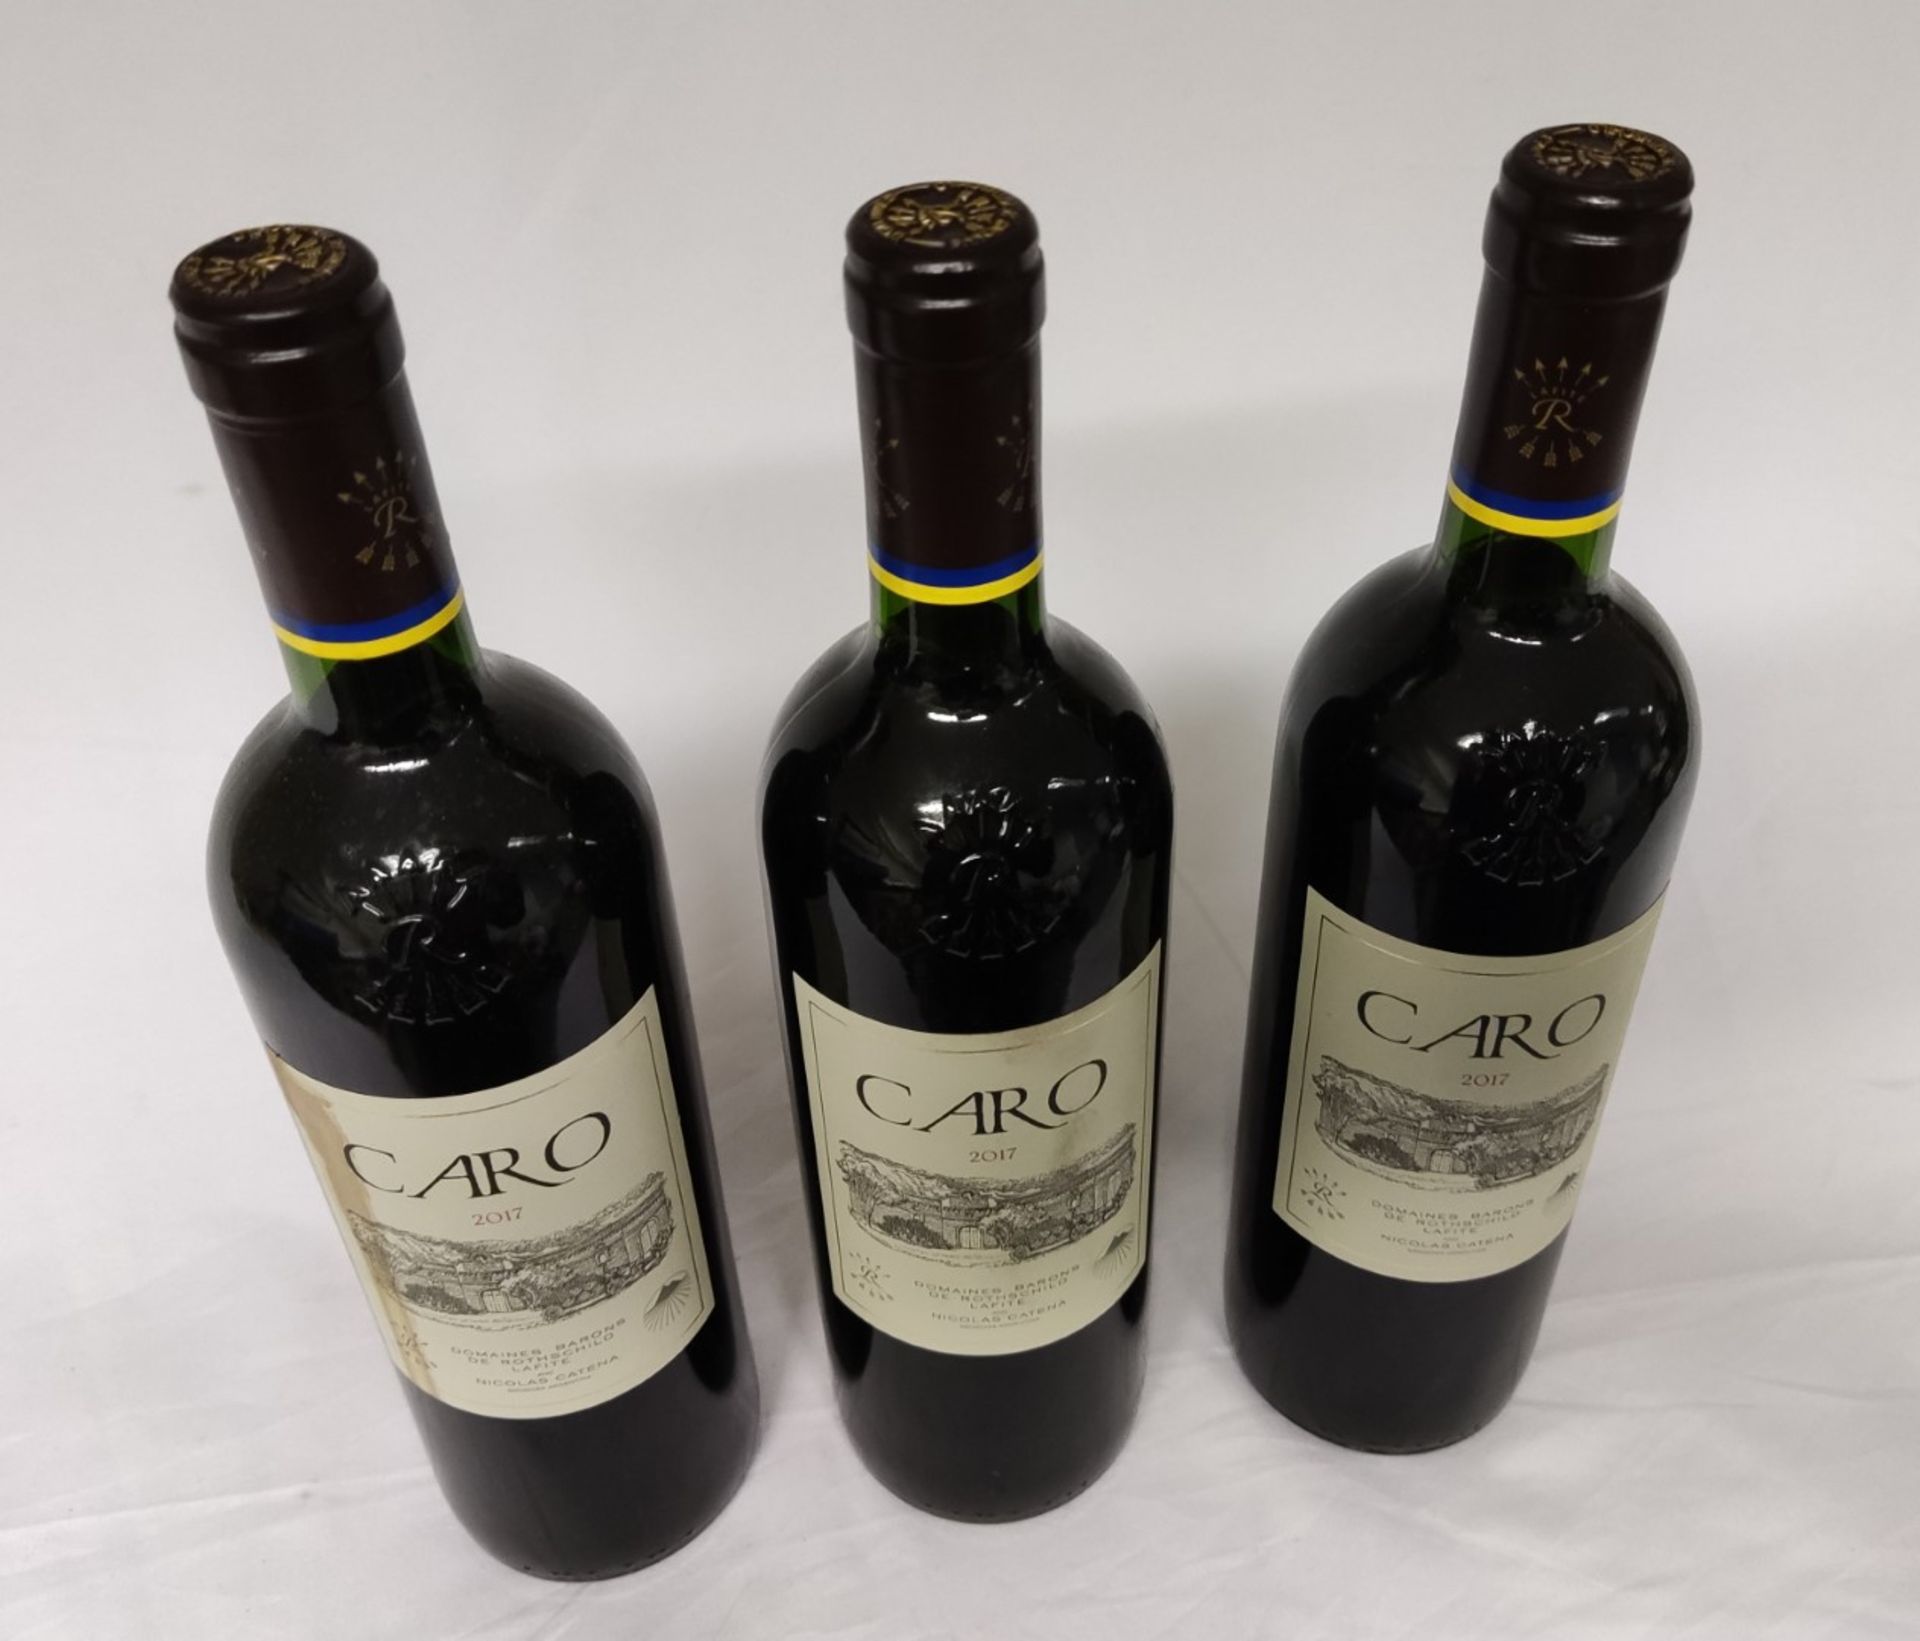 3 x Bottles of 2017 Bodegas Caro, Domaines Barons De Rothschild Lafite And Nicolas Catena - Red Wine - Image 2 of 7